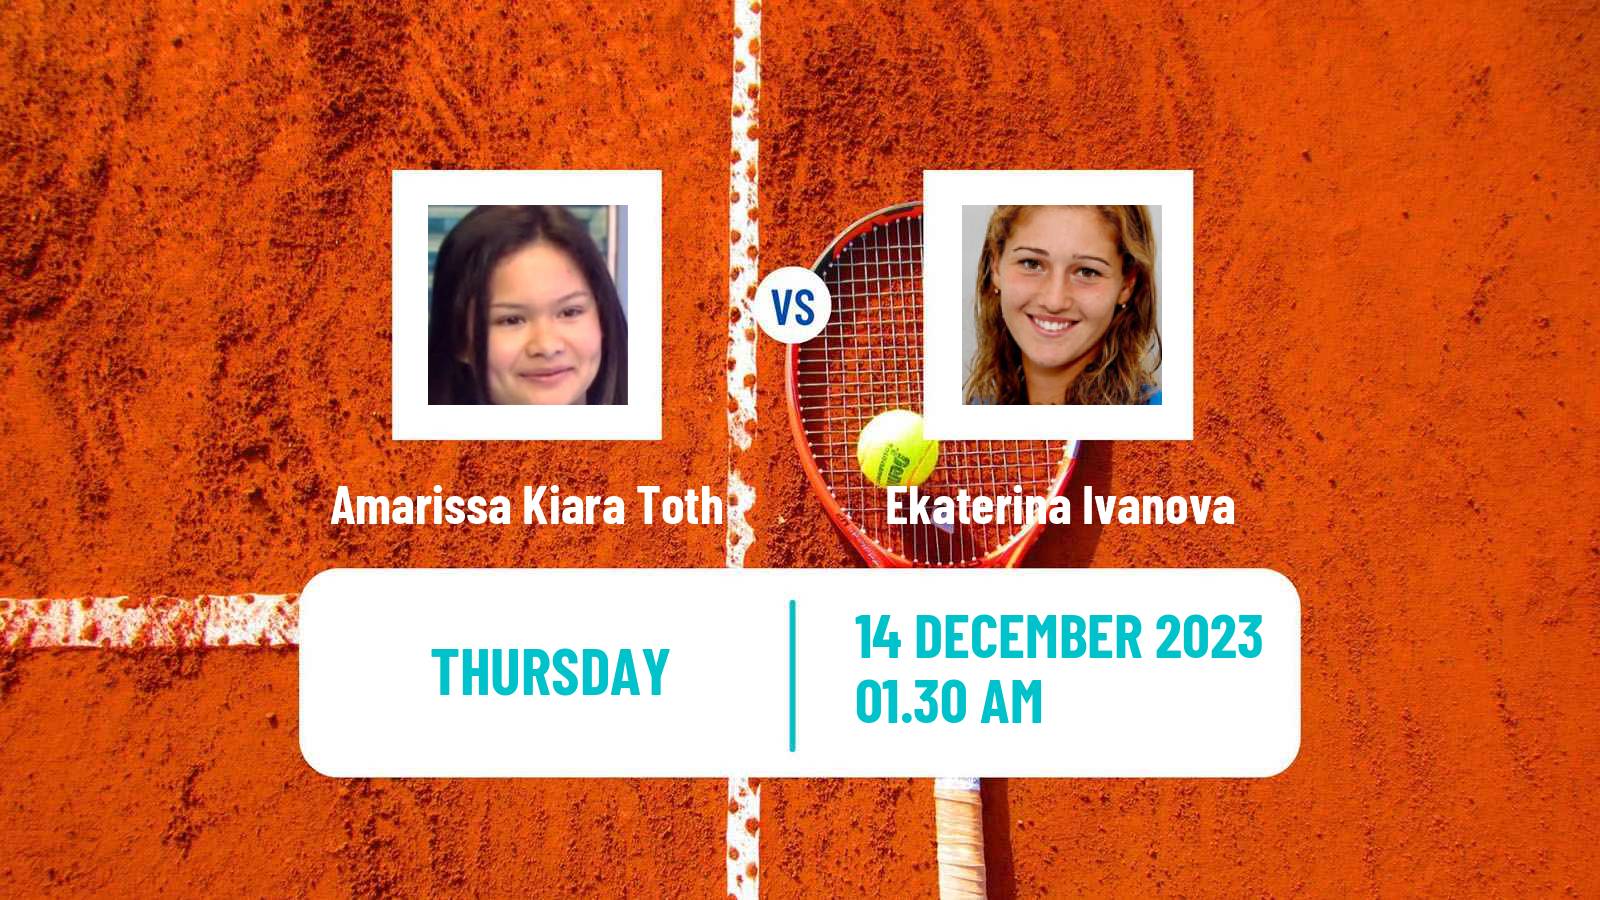 Tennis ITF W15 Antalya 22 Women Amarissa Kiara Toth - Ekaterina Ivanova